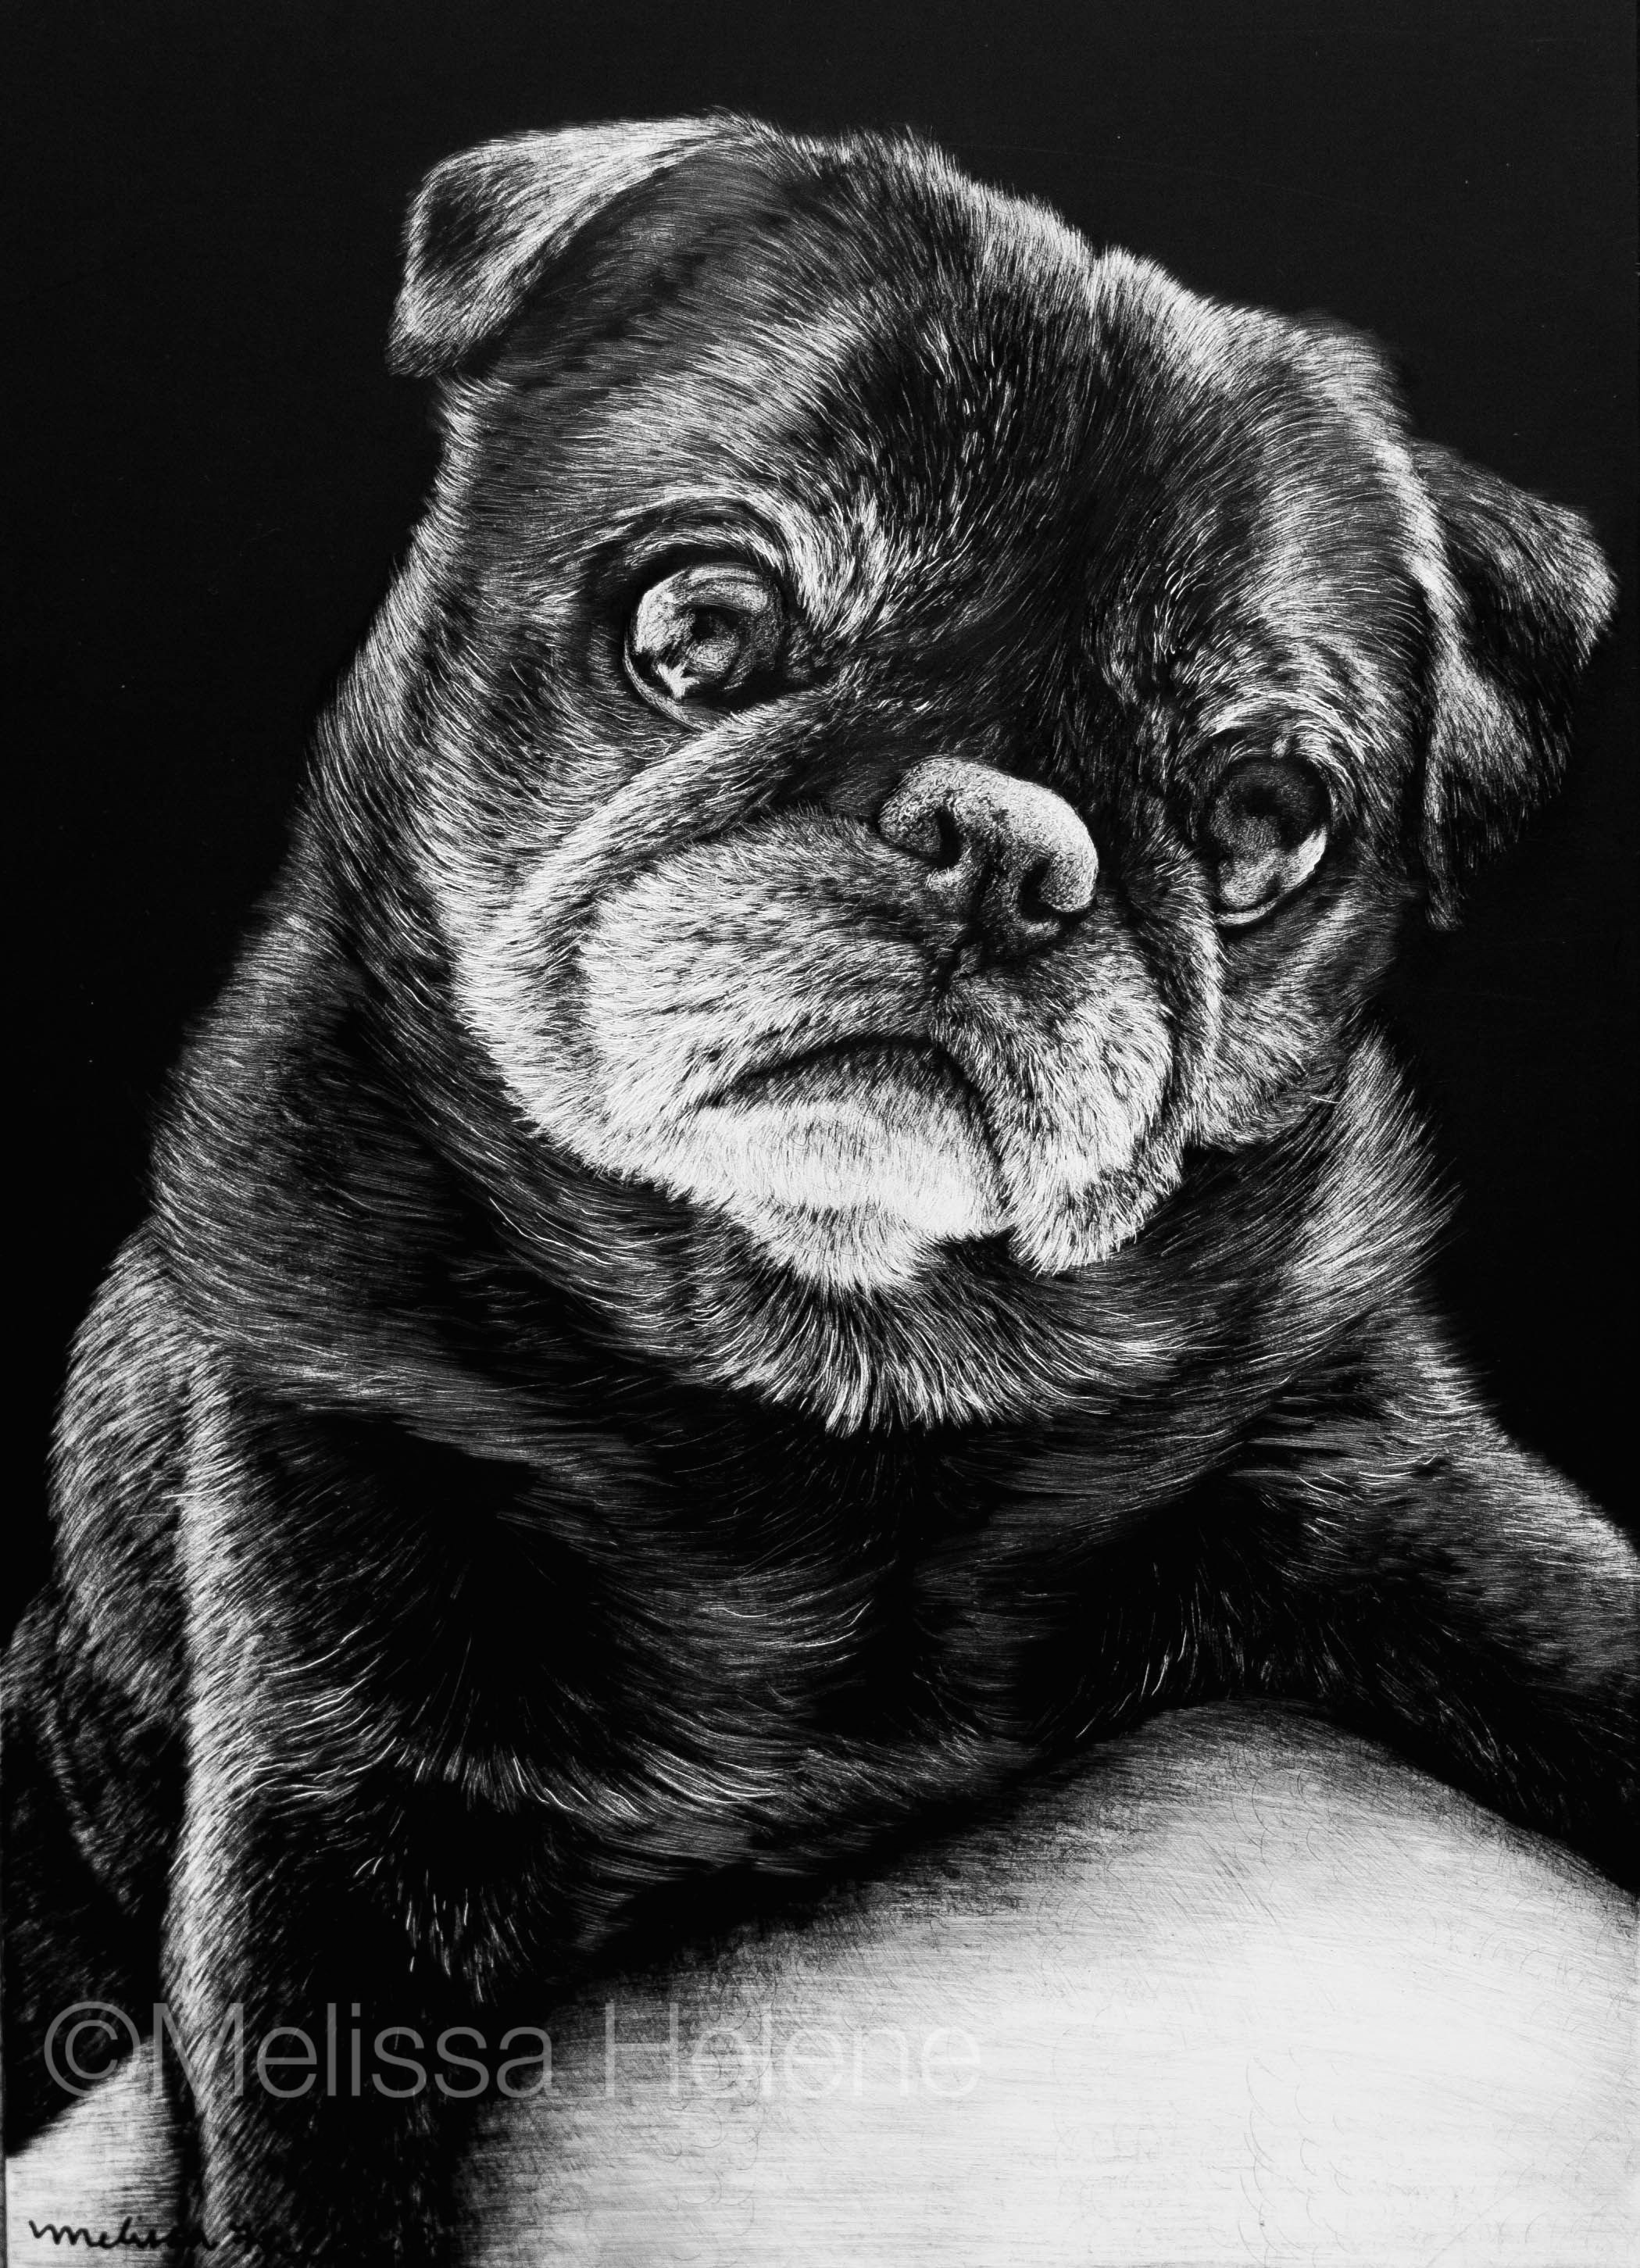 www melissahelene com artwork blackandwhite art commission petportrait portrait scratchboard scratchart dog dogportrait melissahelenefinearts